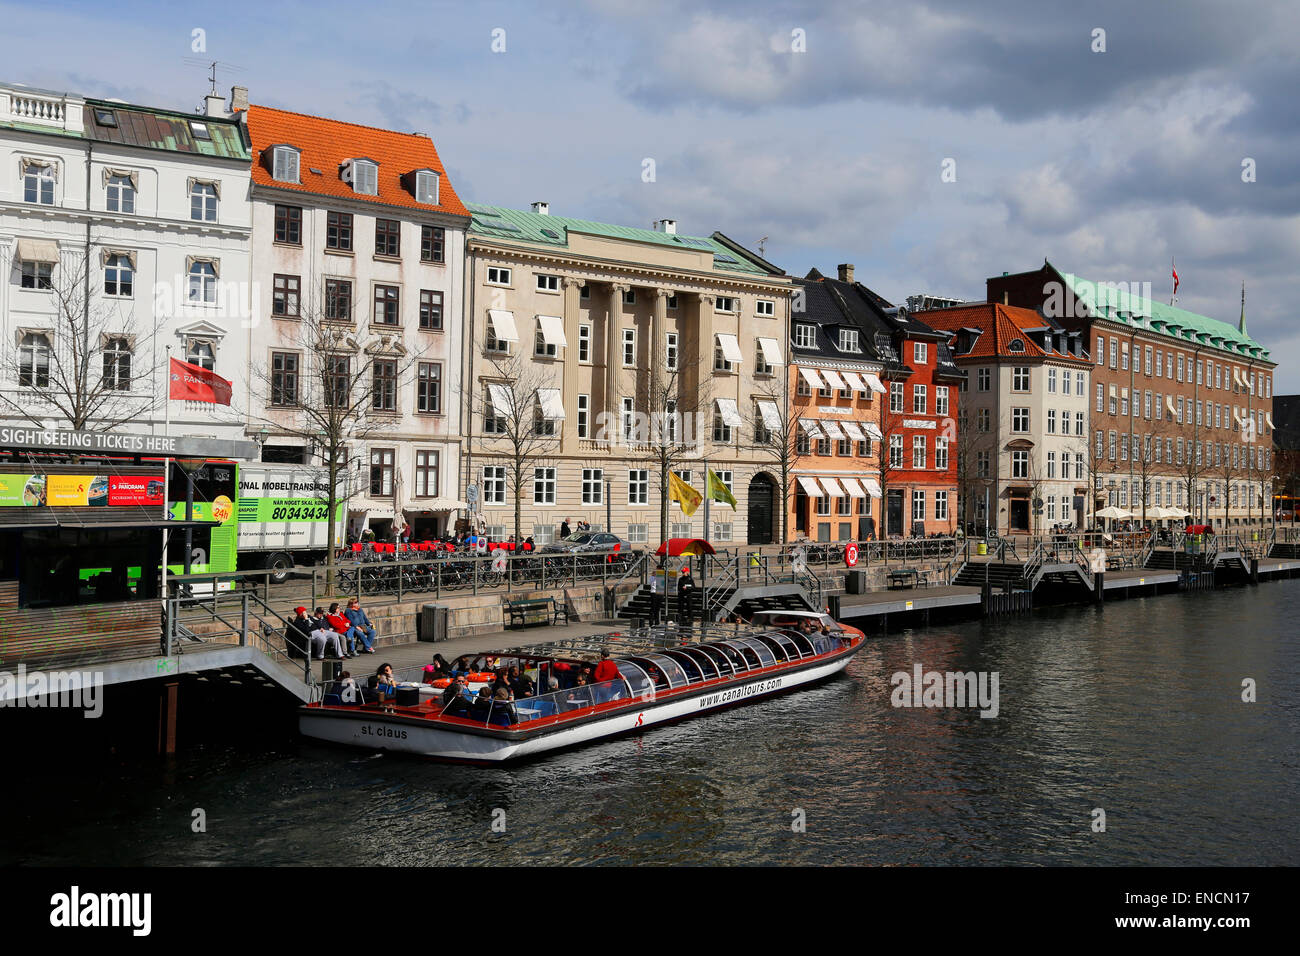 Slotholmens Kanal, Copenhague, Danemark Banque D'Images